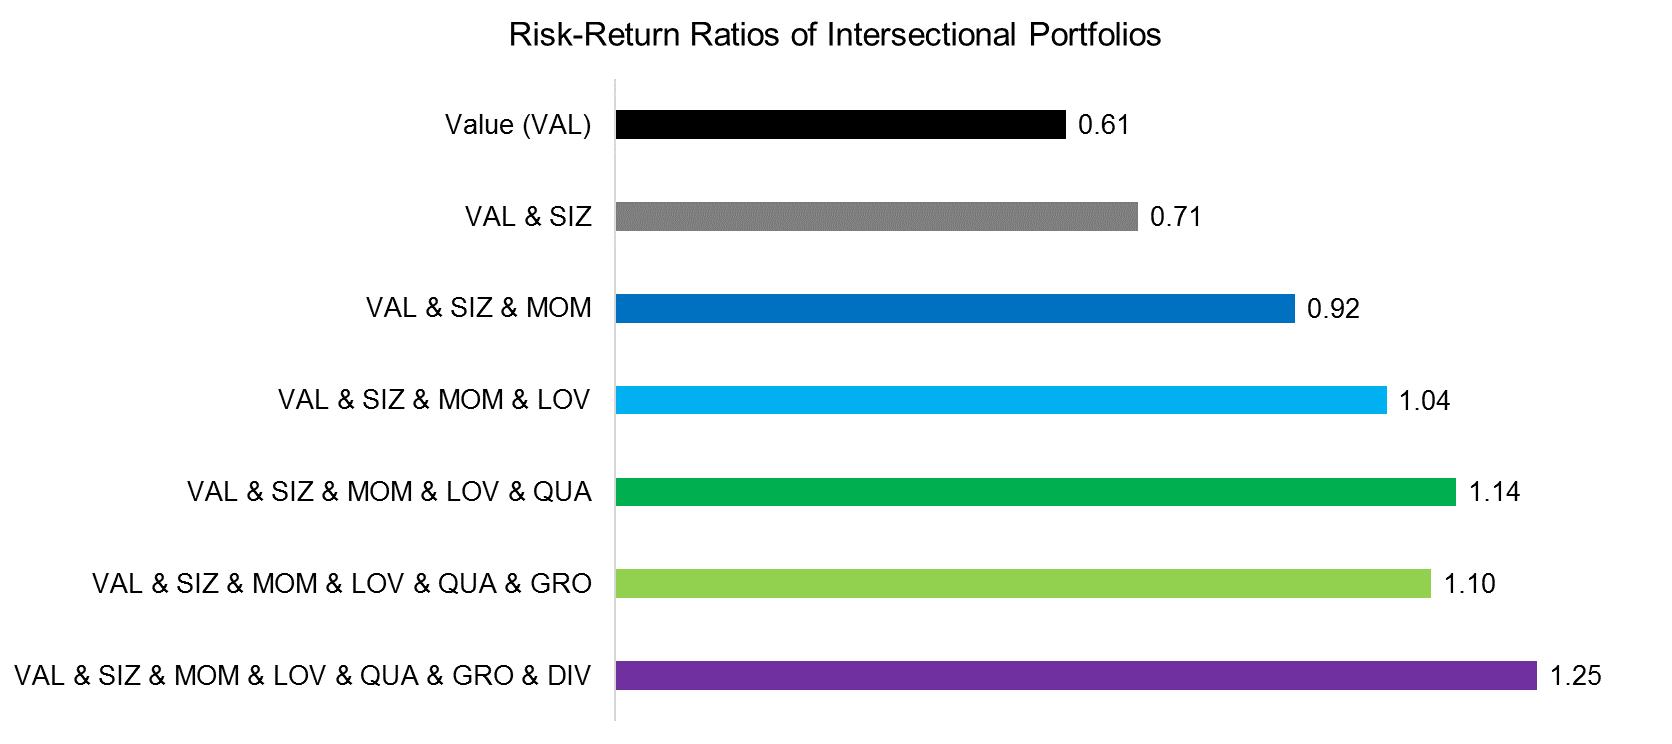 Risk-Return Ratios of Intersectional Portfolios